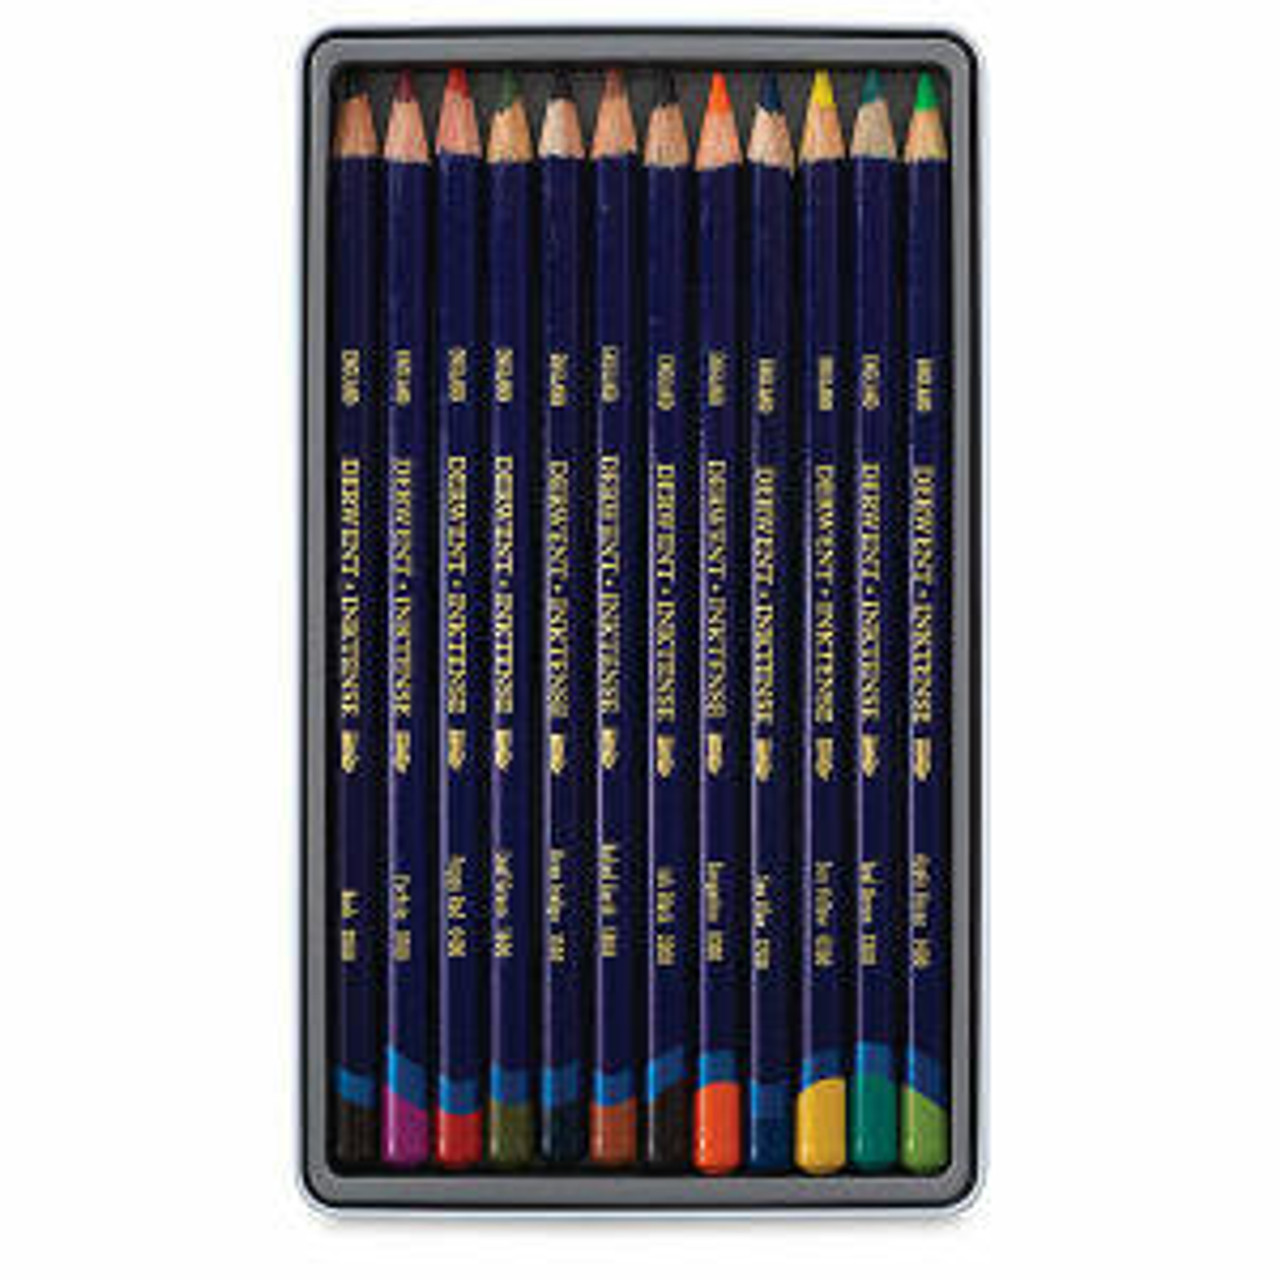 Derwent - Inktense Pencil Set - 12-Color Set (Tin)